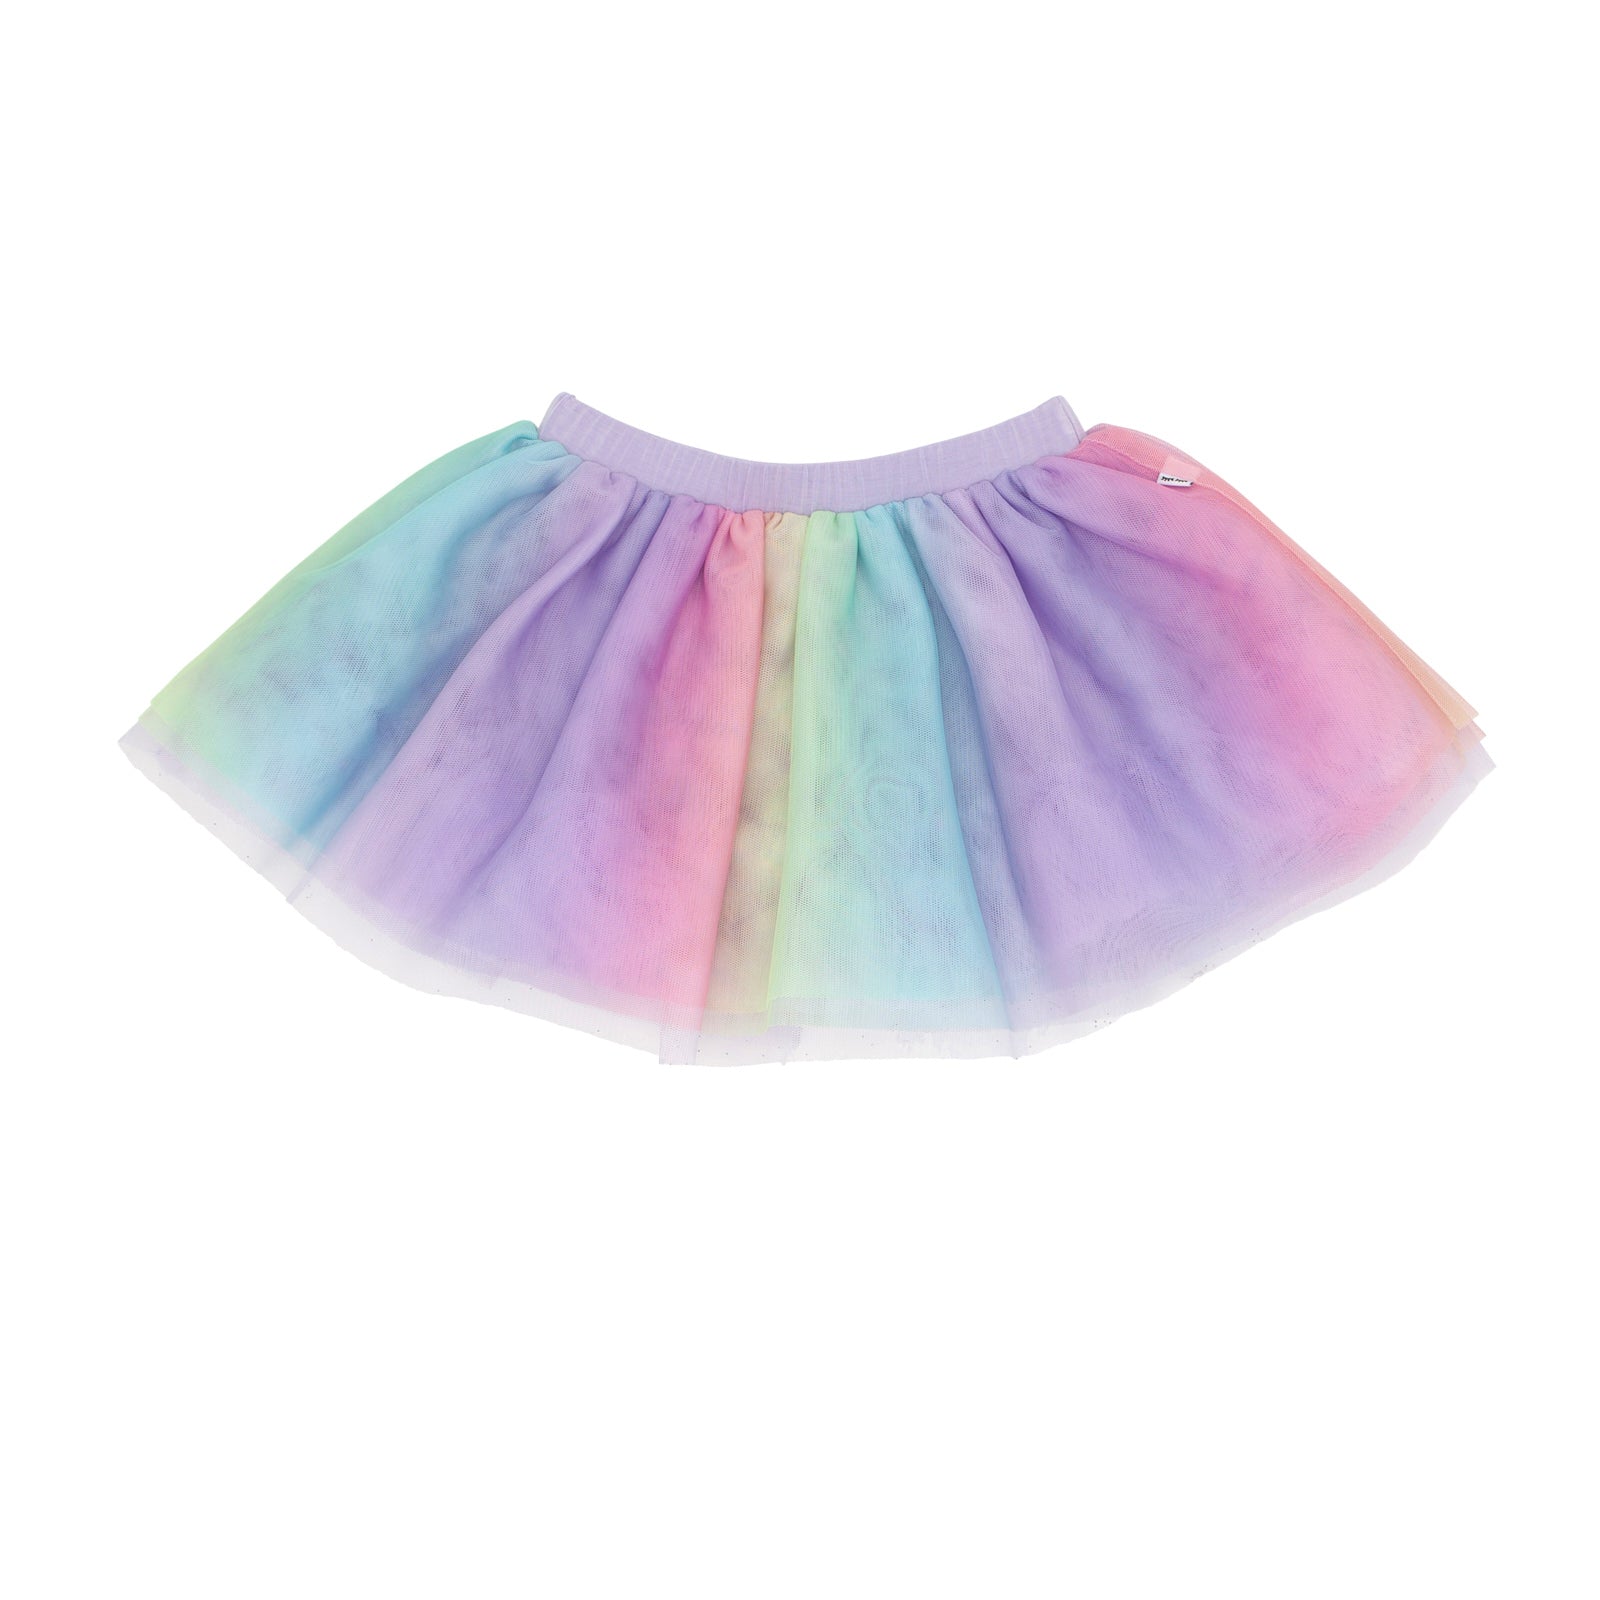 Flat lay image of a Rainbow graphic tutu skirt